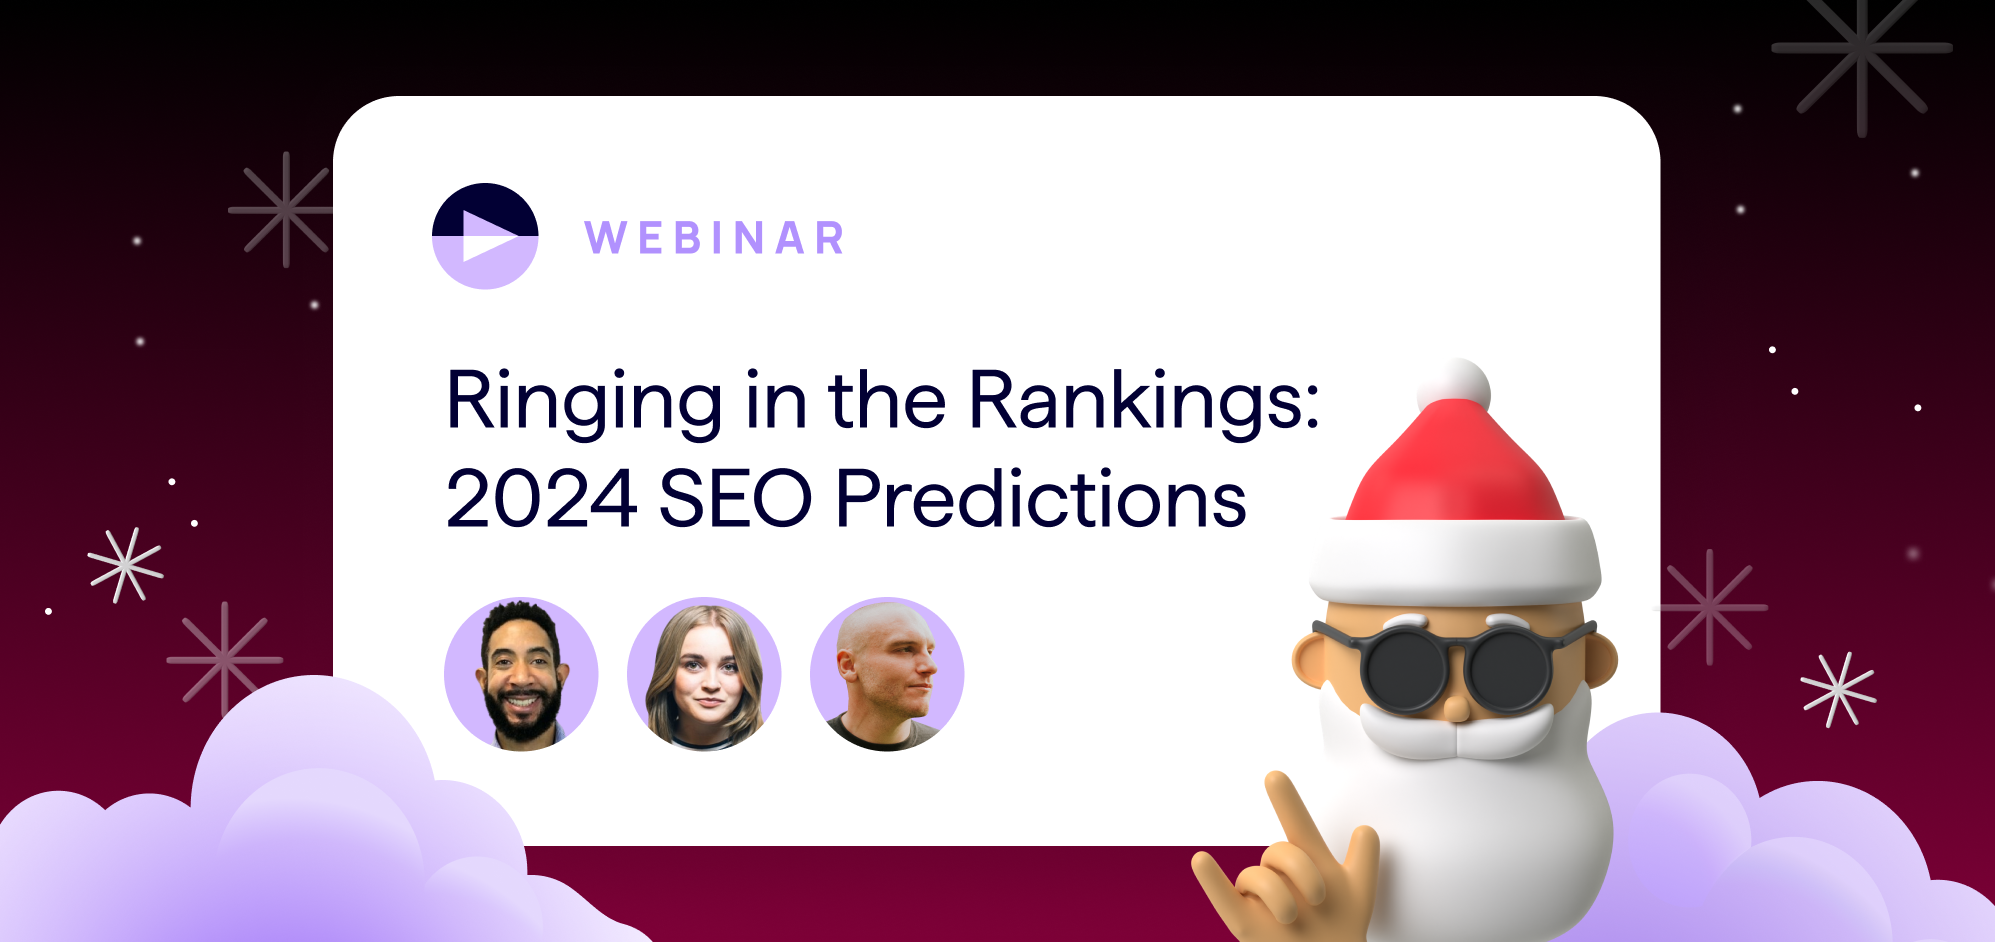 Webinar Thumbnail - 2024 SEO Predictions - Ringing in the Rankings